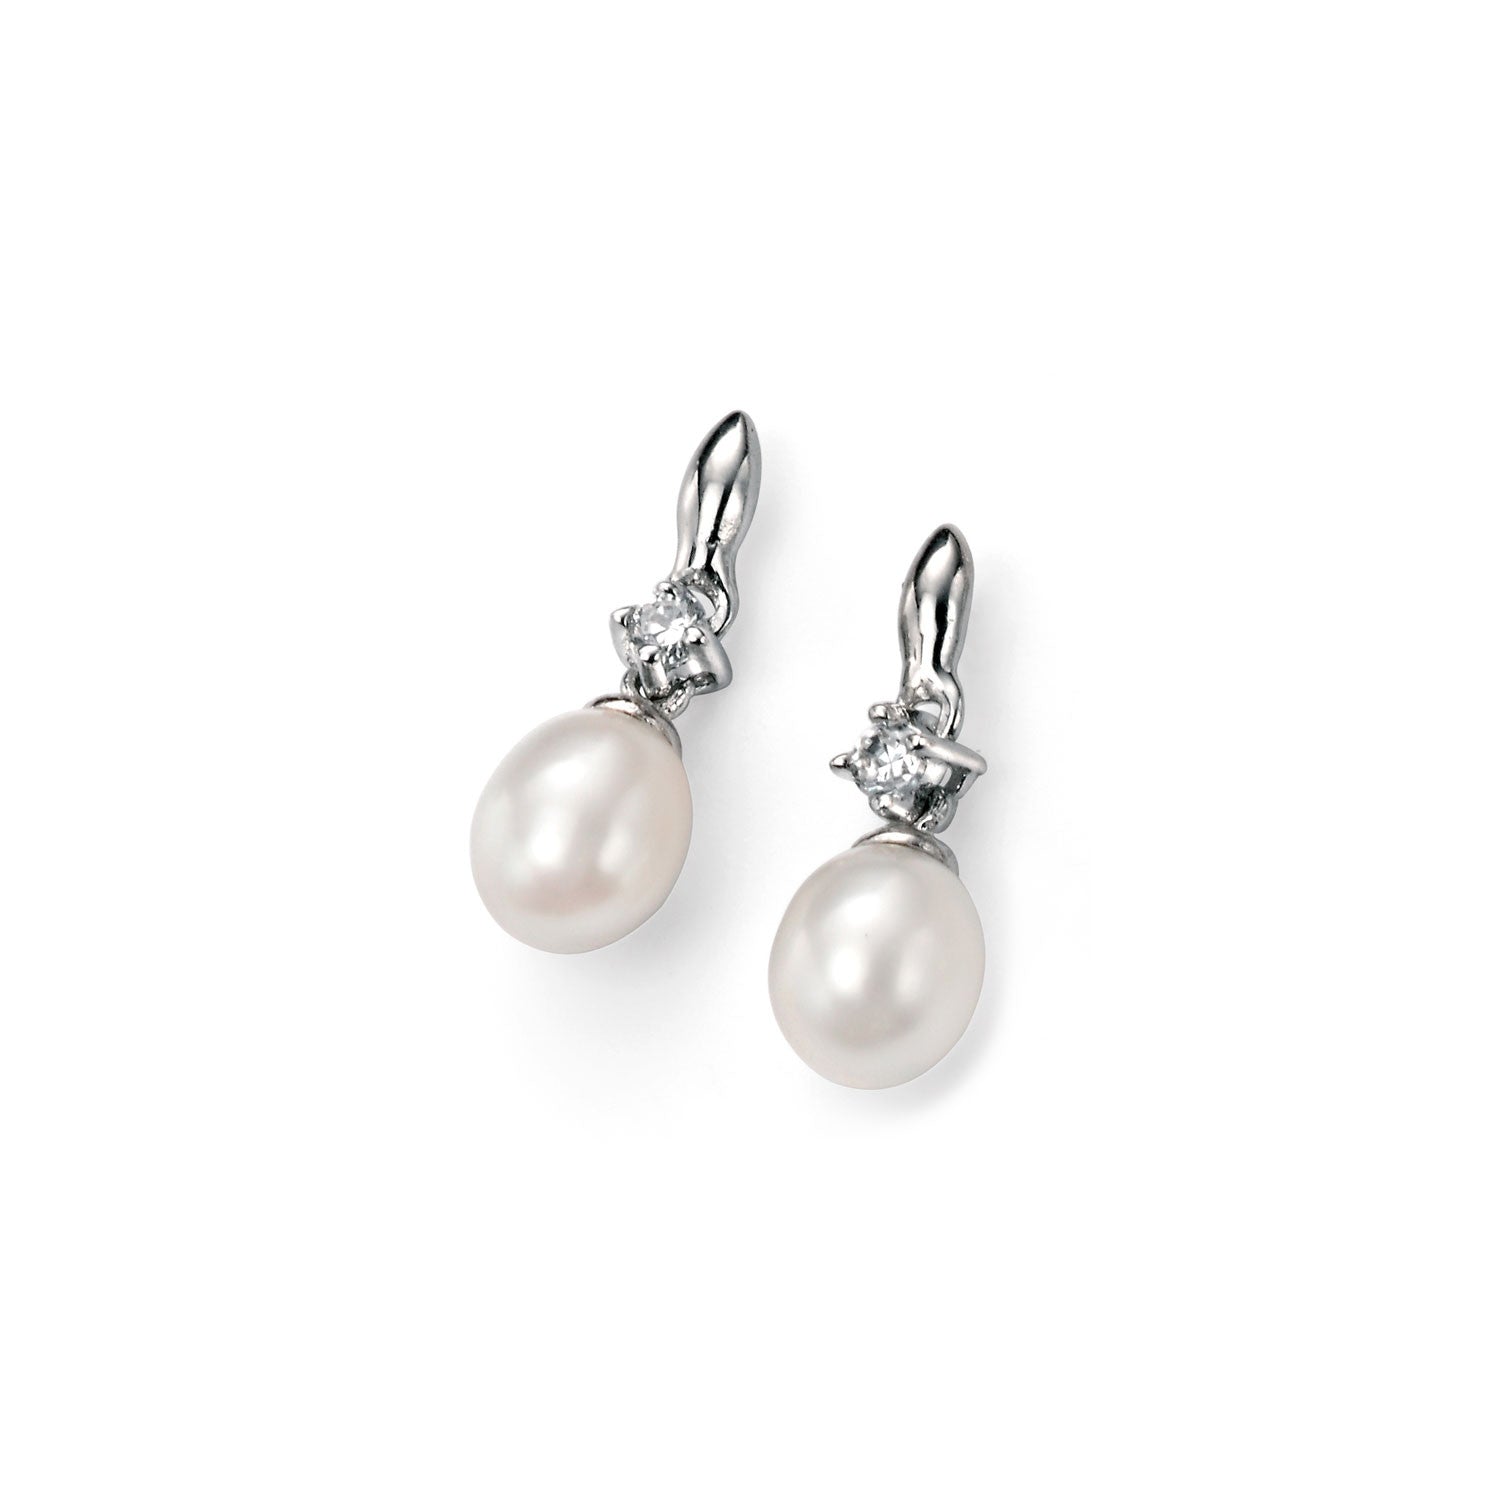 Buy Tiny Teardrop White Pearl Earrings for £32.99 | Uneak Boutique